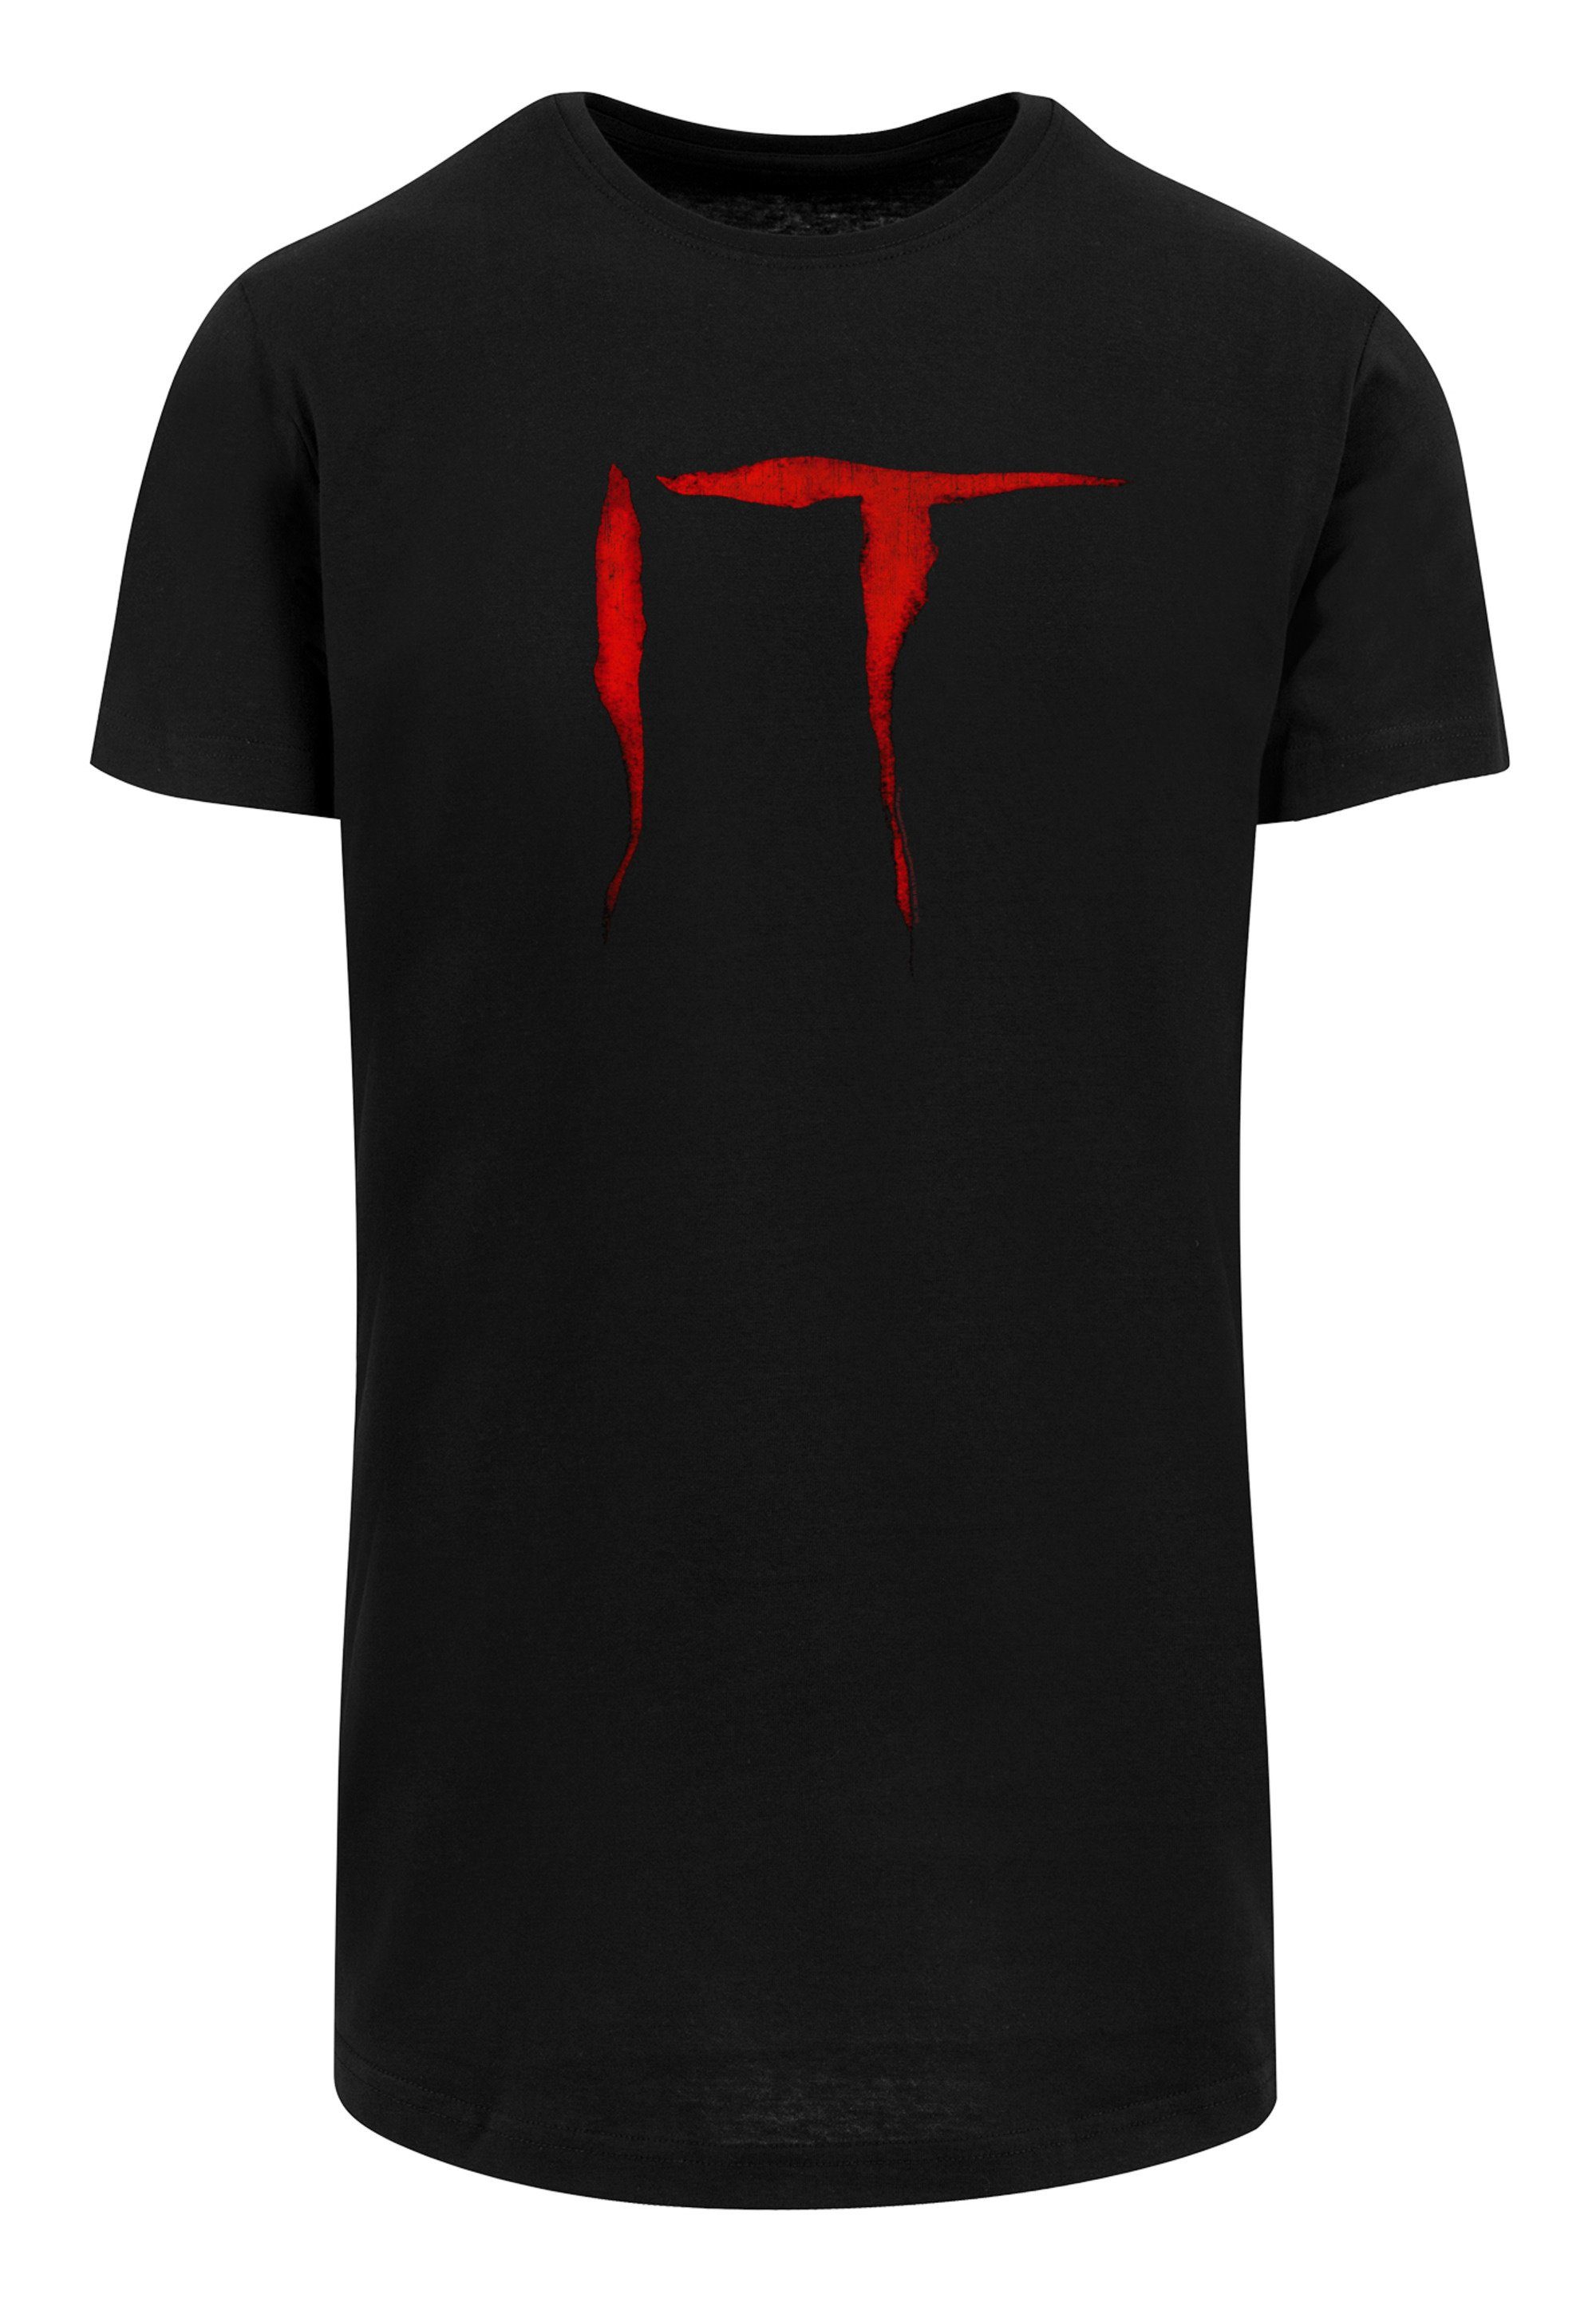 F4NT4STIC T-Shirt Long Cut T-Shirt IT Film ES Stephen King Distressed Logo  Print, Sehr weicher Baumwollstoff mit hohem Tragekomfort